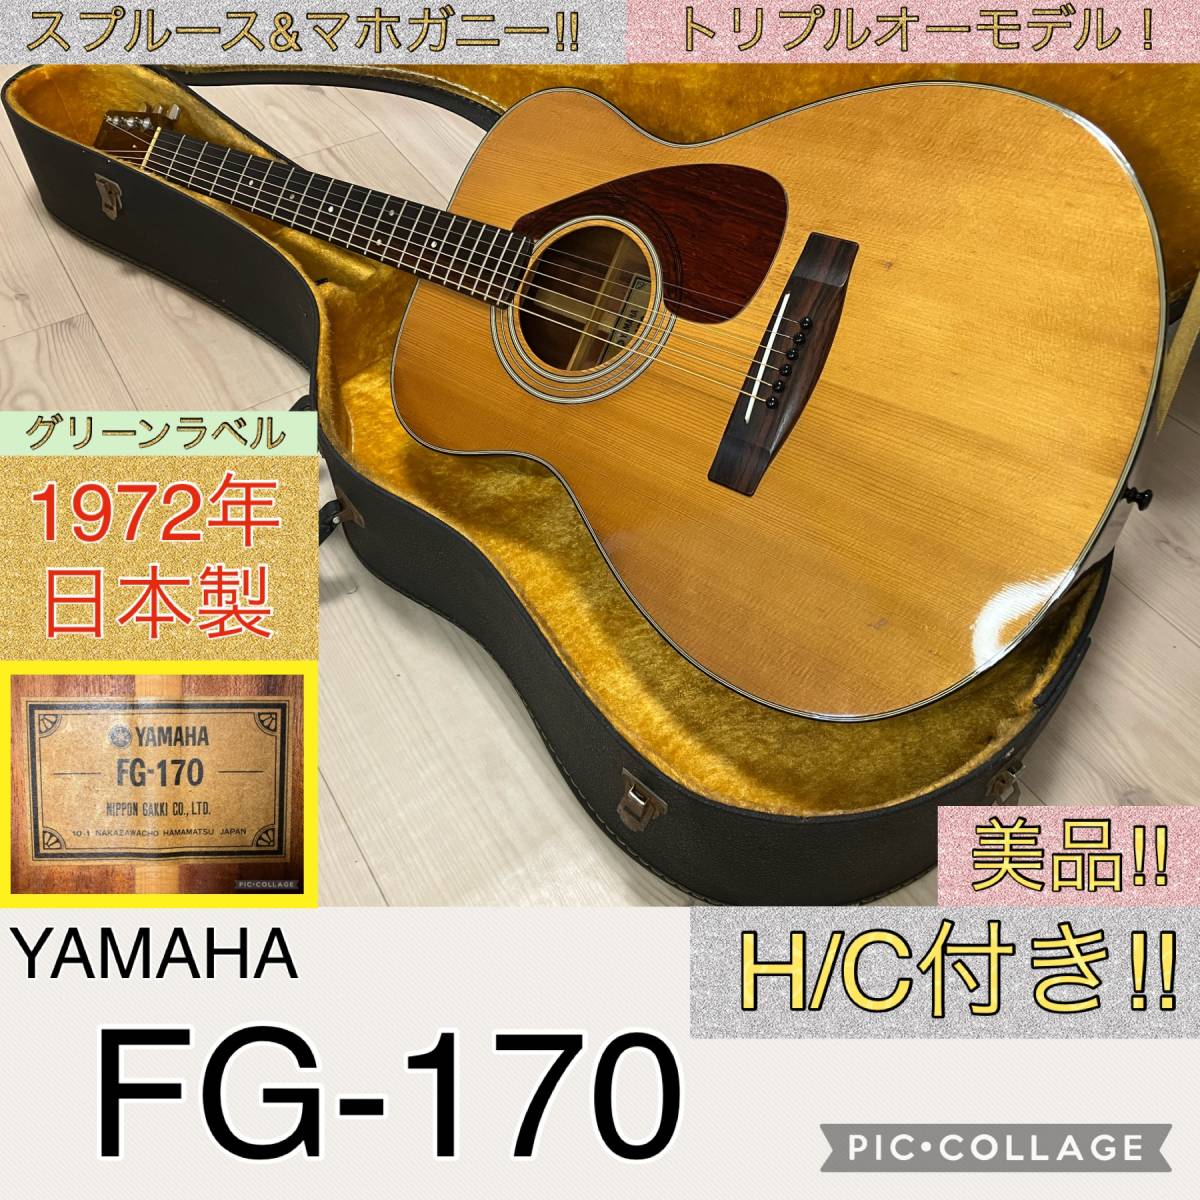 Yamaha FG-170 グリーンラベル 1973年製 日本製 送料込み-